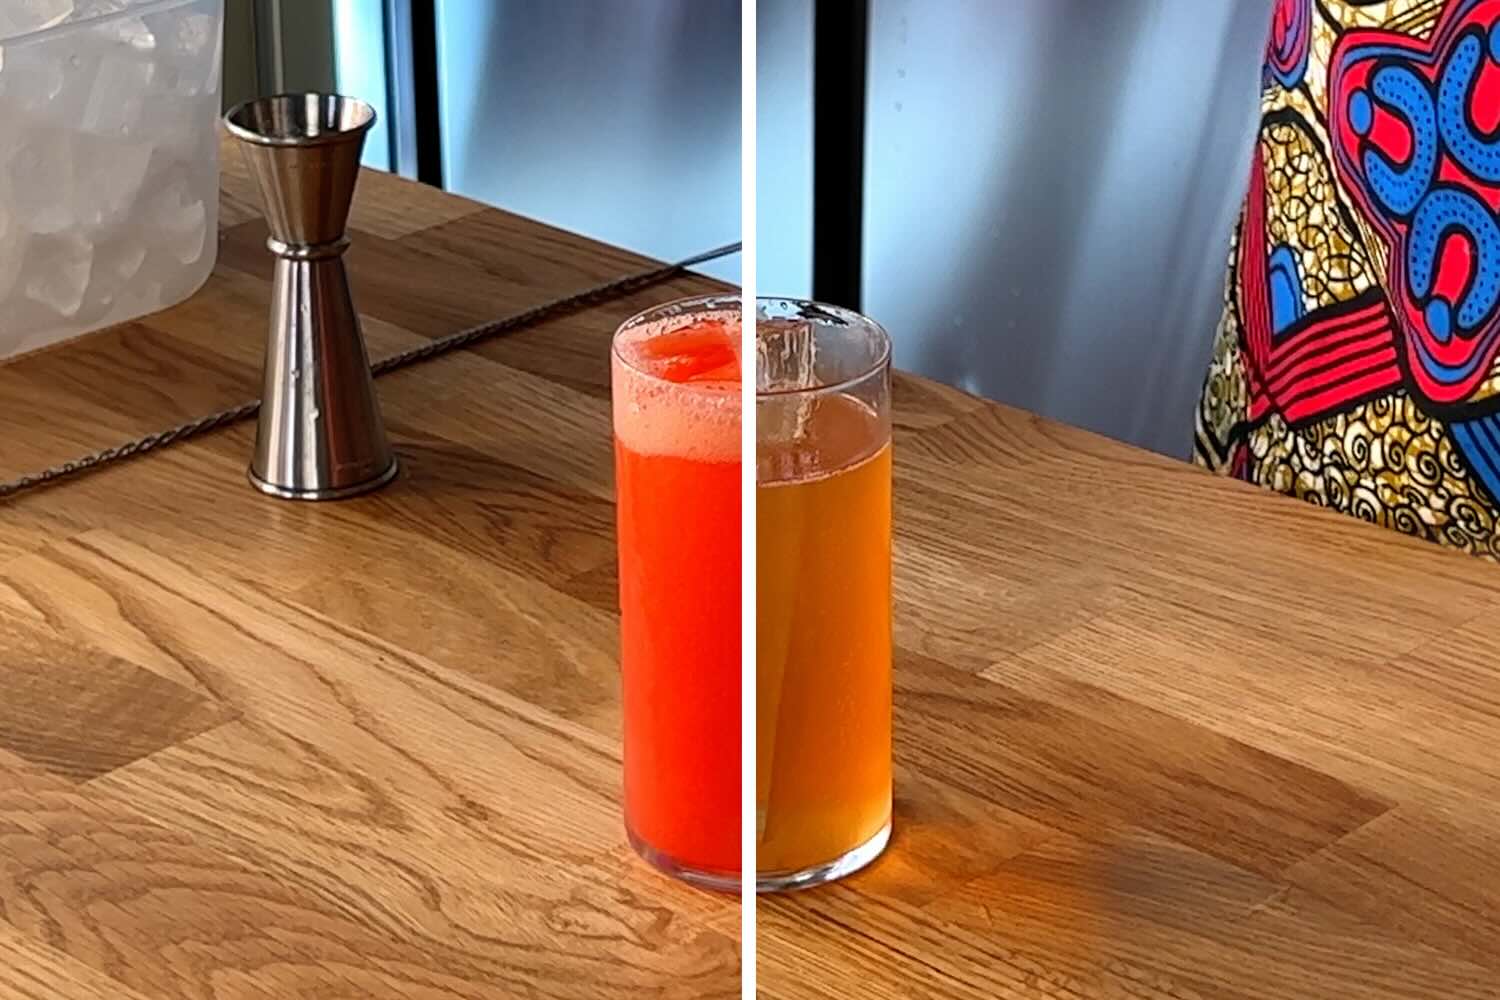 Perchè-Si-Cocktail